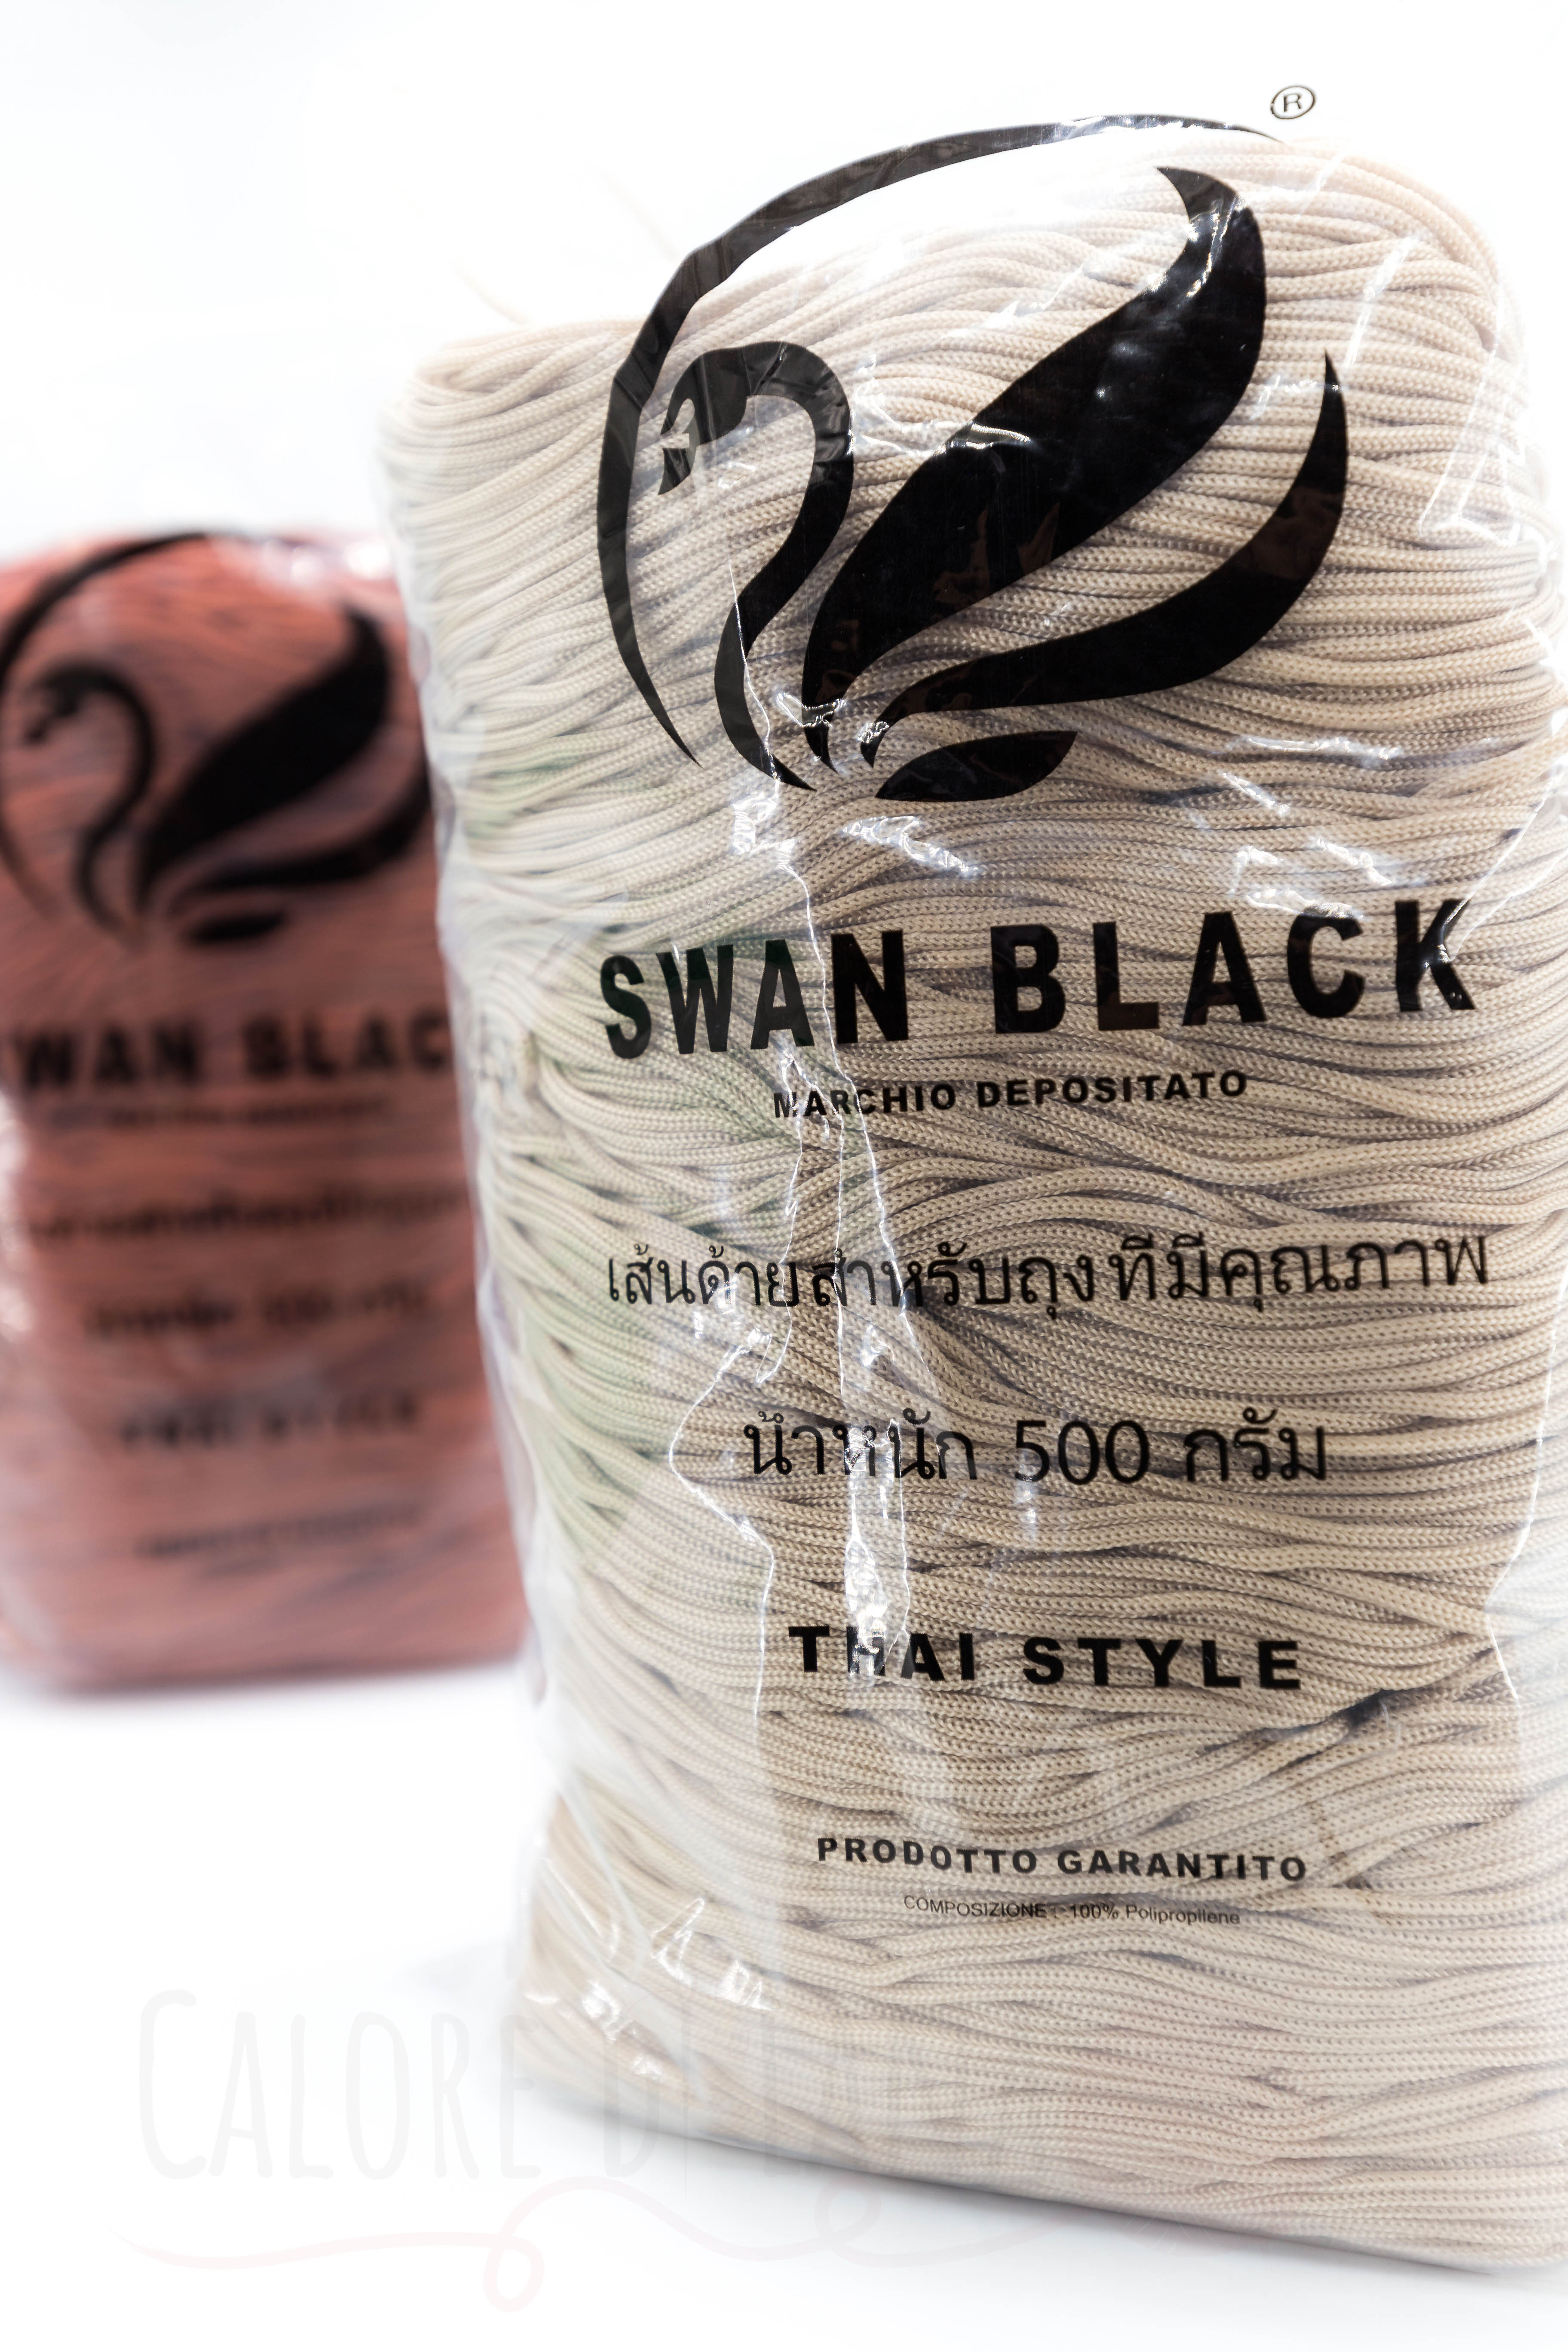 Swan Cordino Thai Swan Black 500gr BURRO polipropilene borsa uncinetto tre sfere 